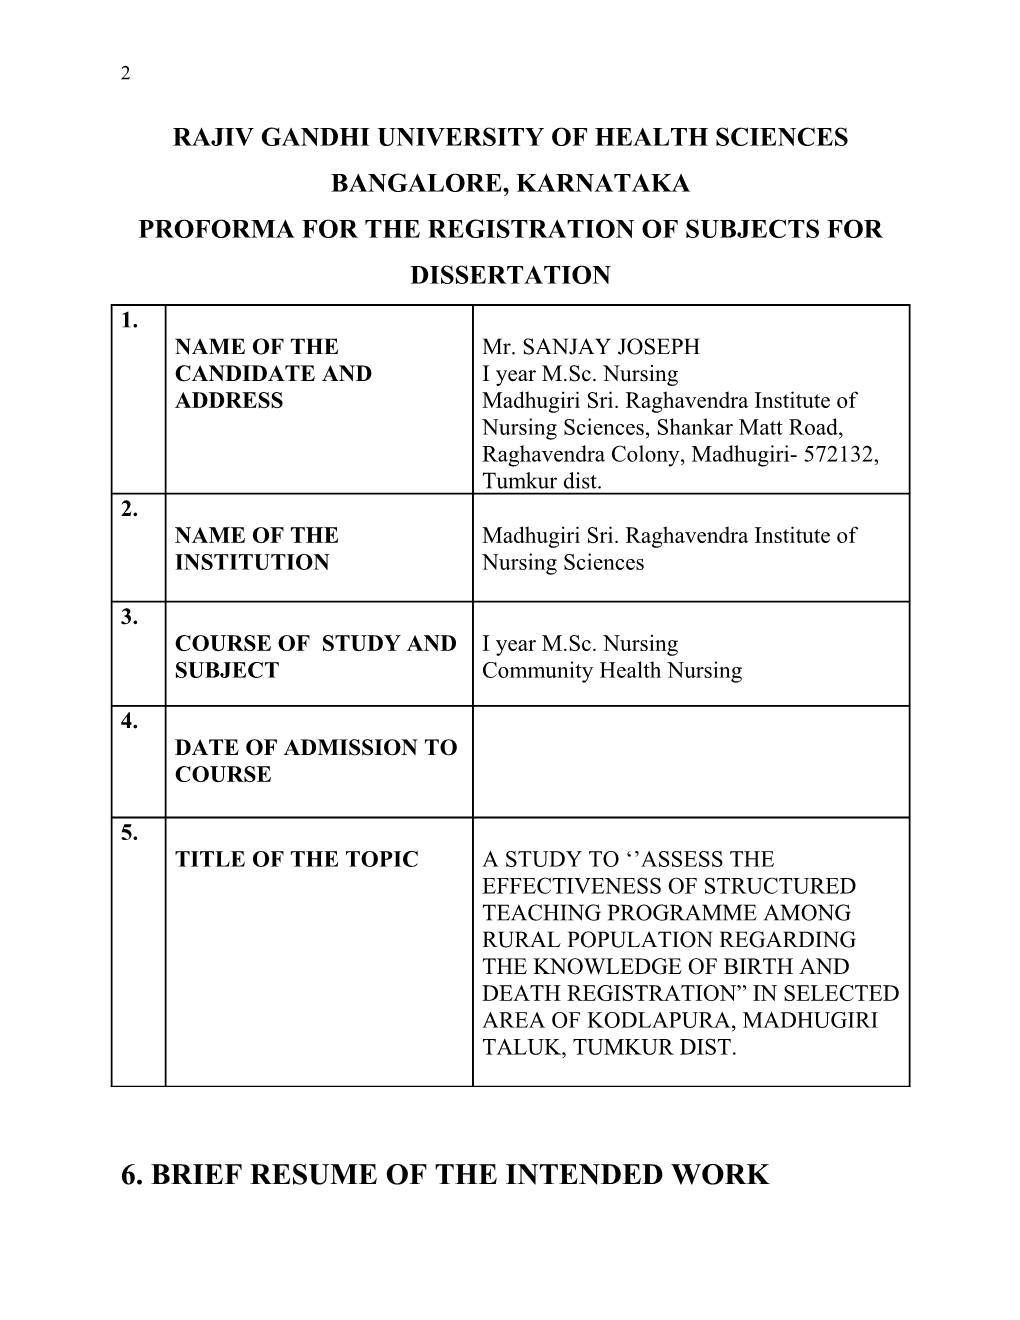 Rajiv Gandhi University of Health Sciences Bangalore, Karnataka s53